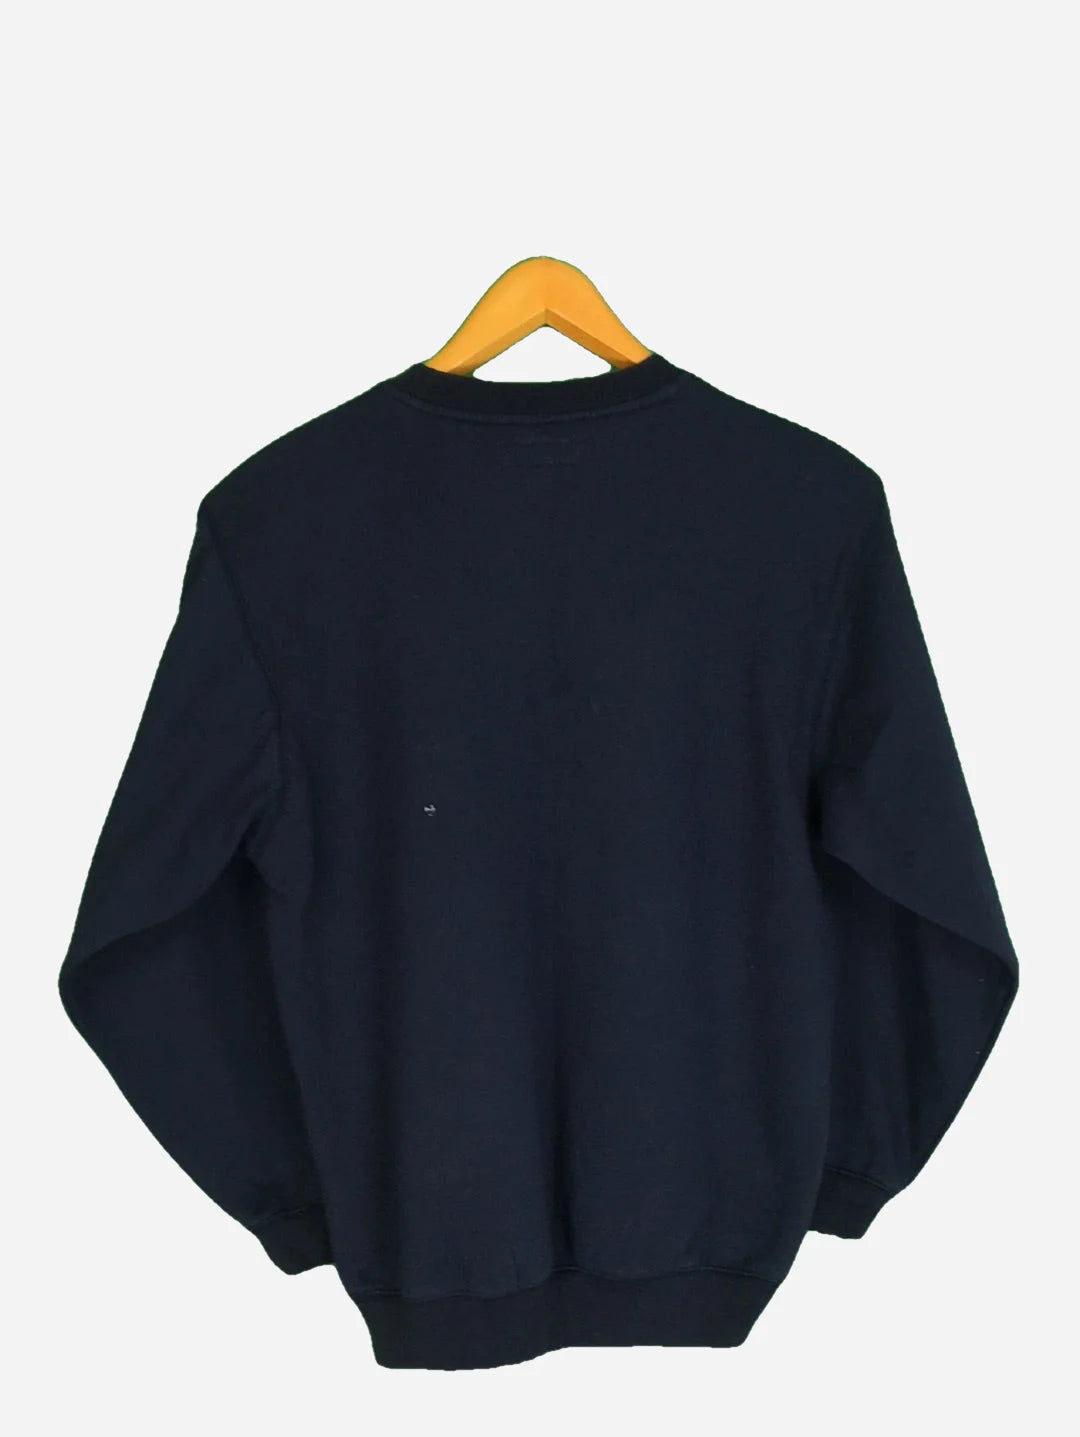 Reebok Sweater (XS)